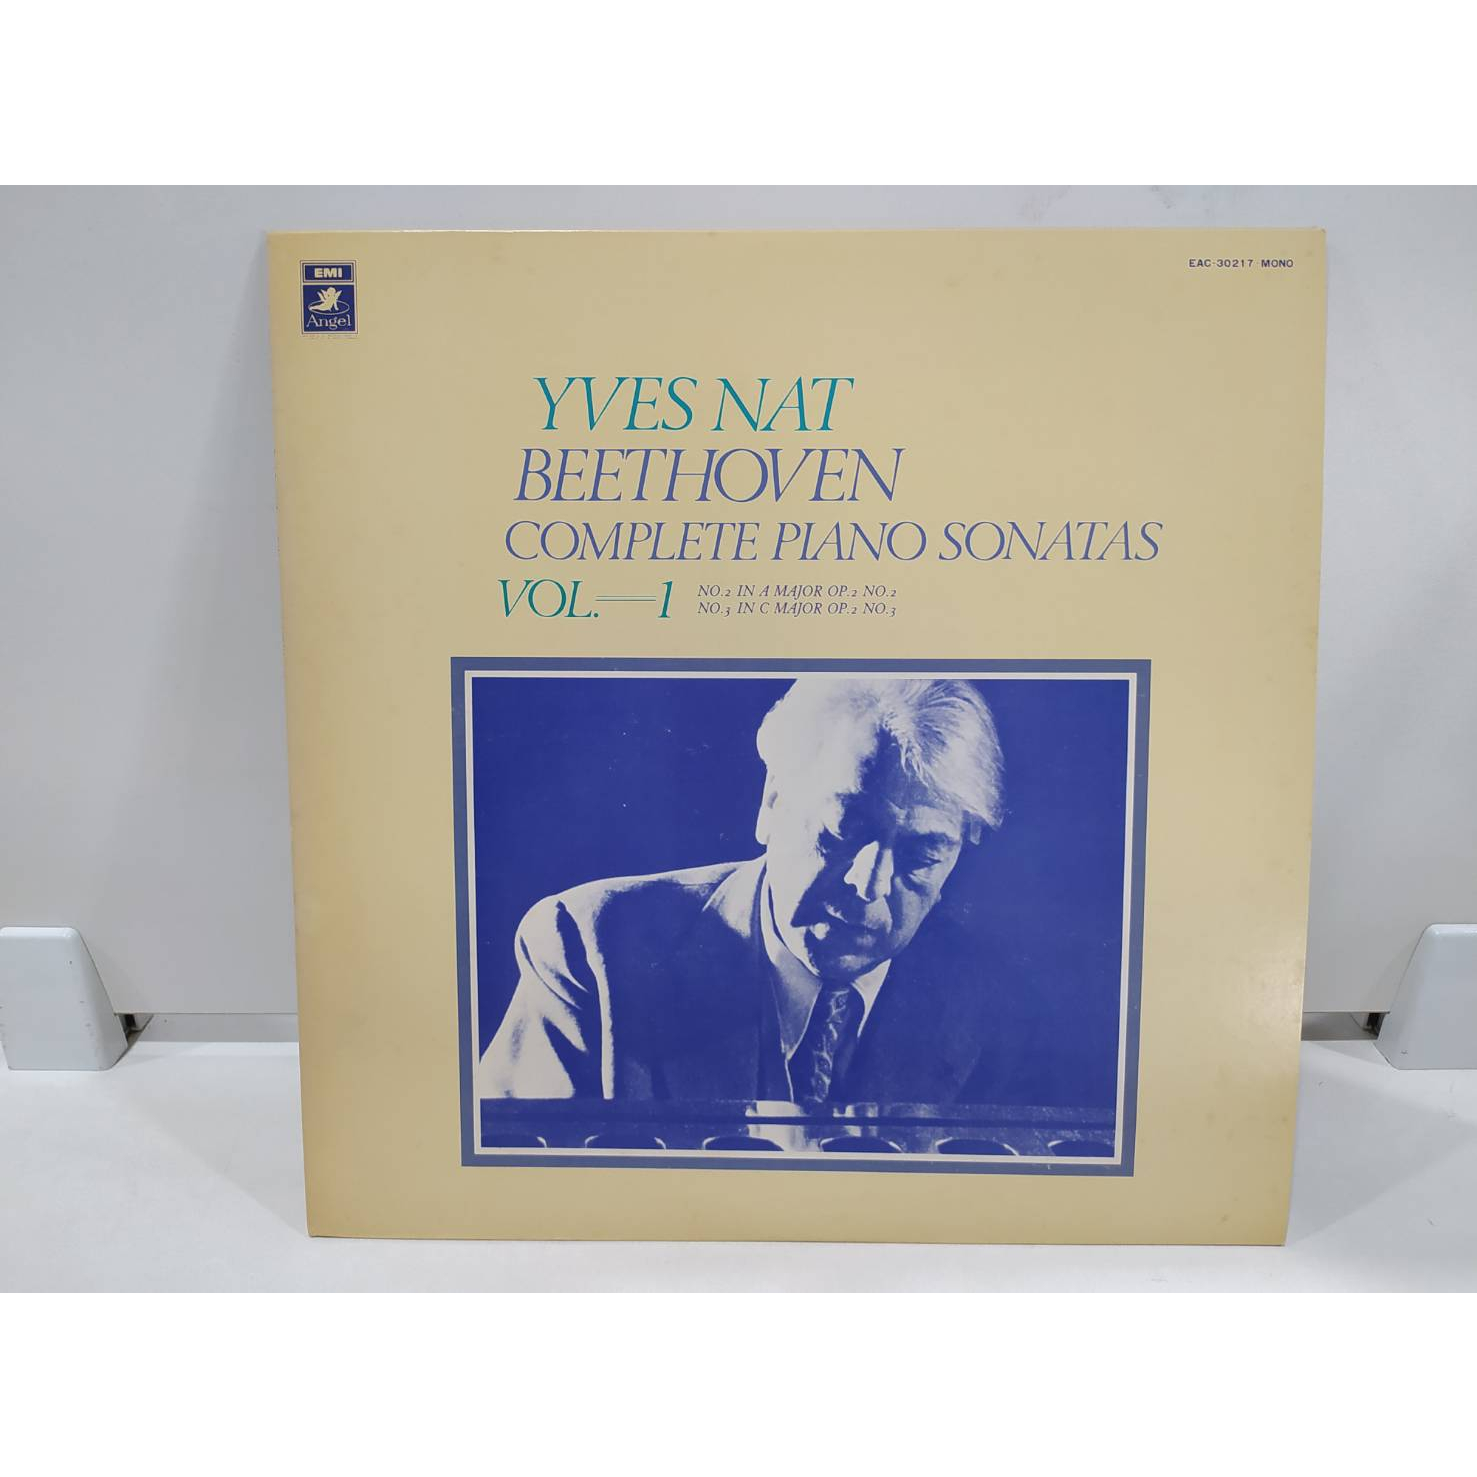 1lp-vinyl-records-แผ่นเสียงไวนิล-yves-nat-beethoven-complete-piano-sonatas-vol-1-j10c144